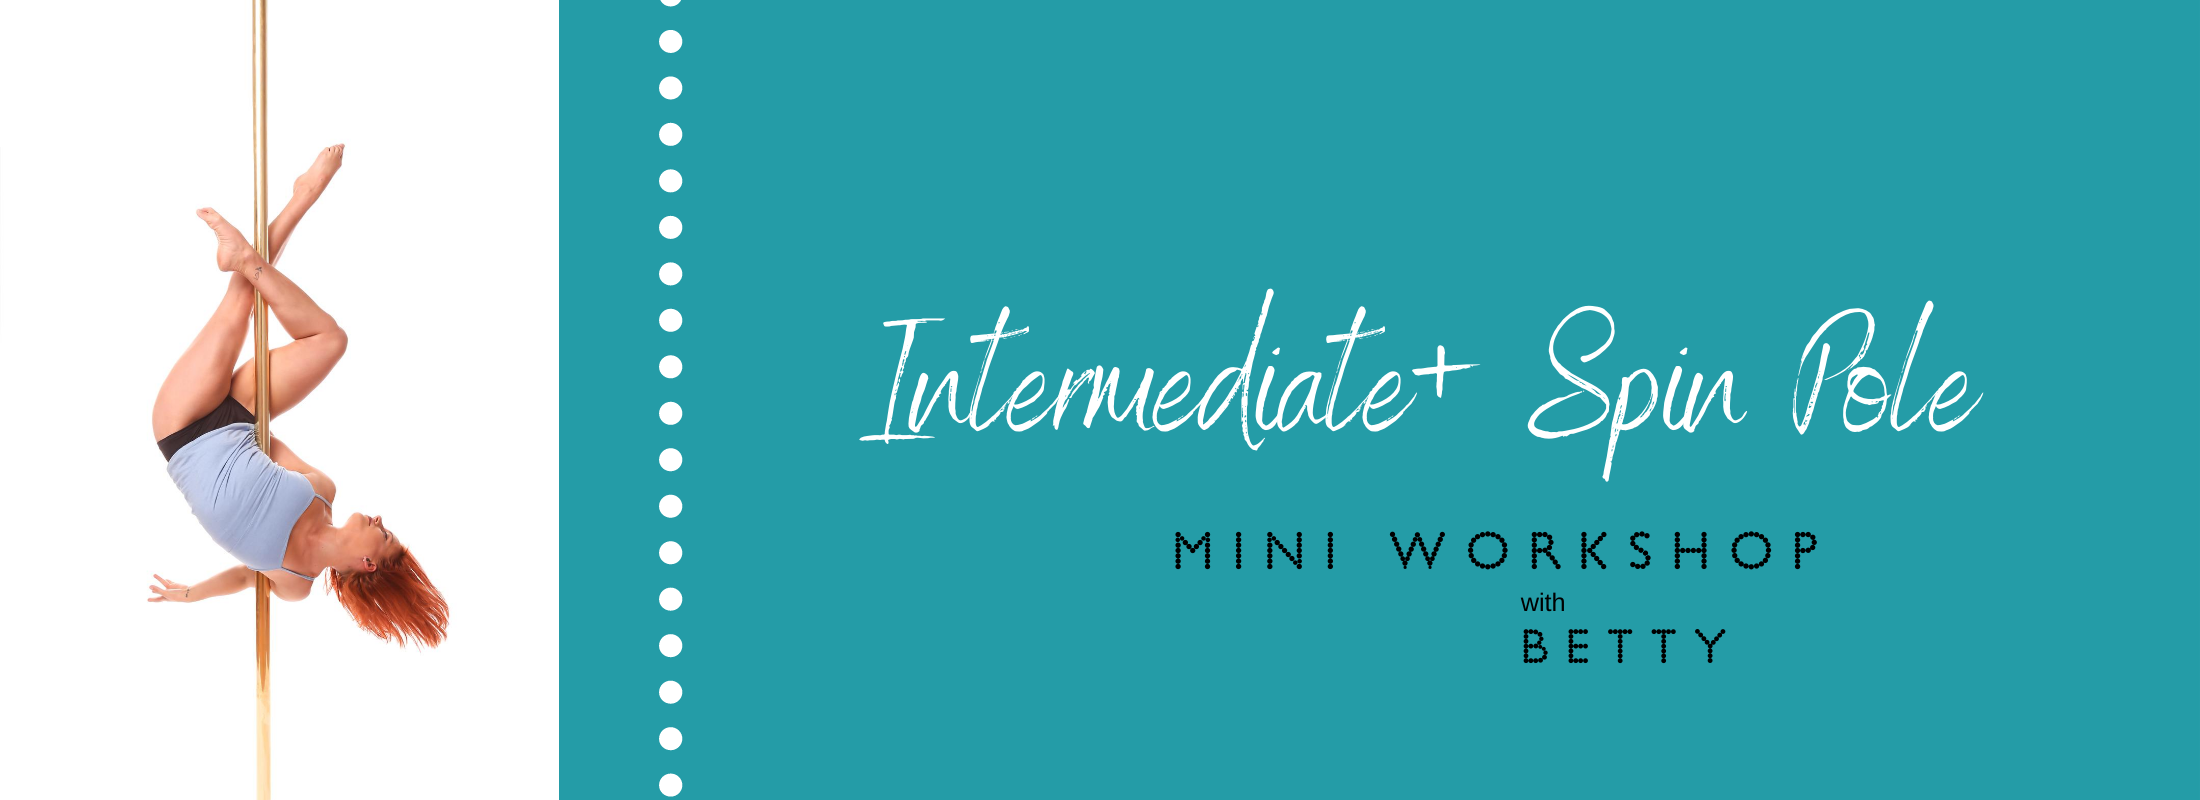 Intermediate + Spin Pole Mini Workshop (In Studio and Online